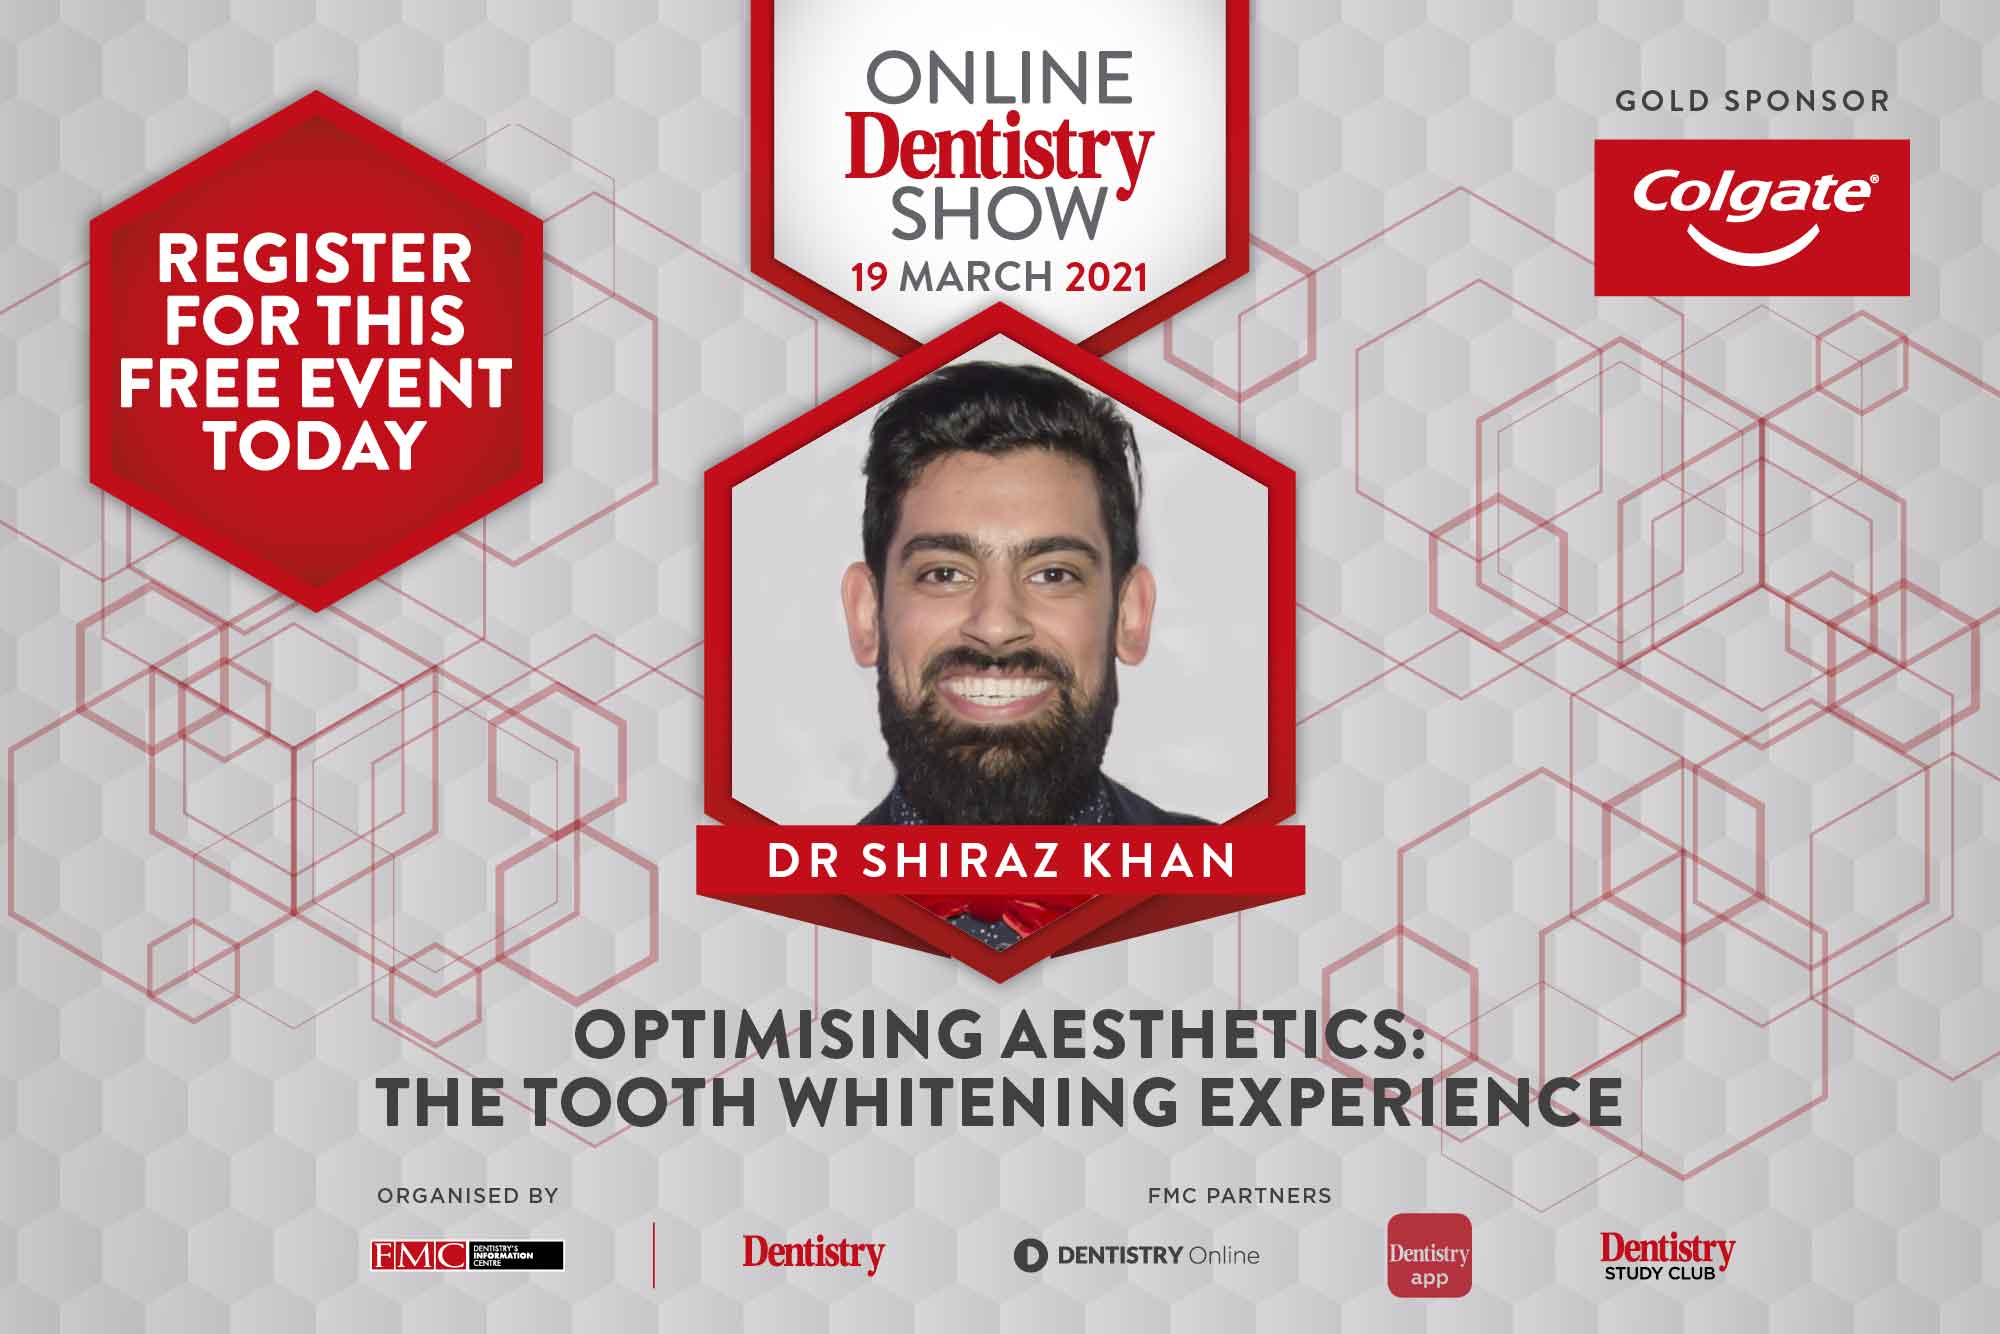 Shiraz Khan at the Online Dentistry Show